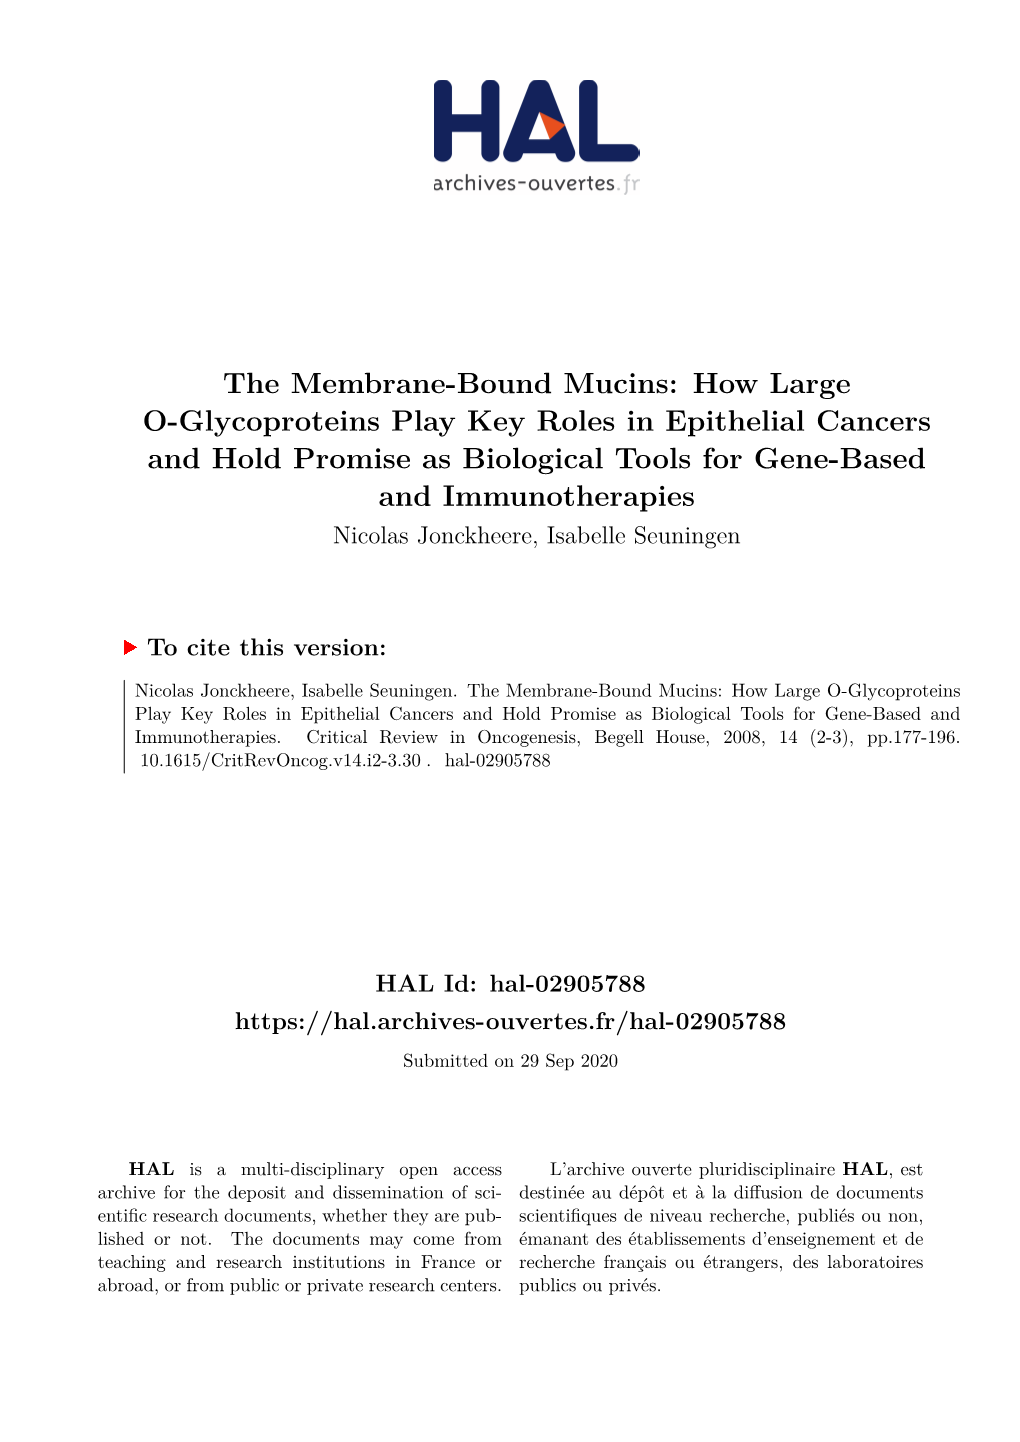 The Membrane-Bound Mucins